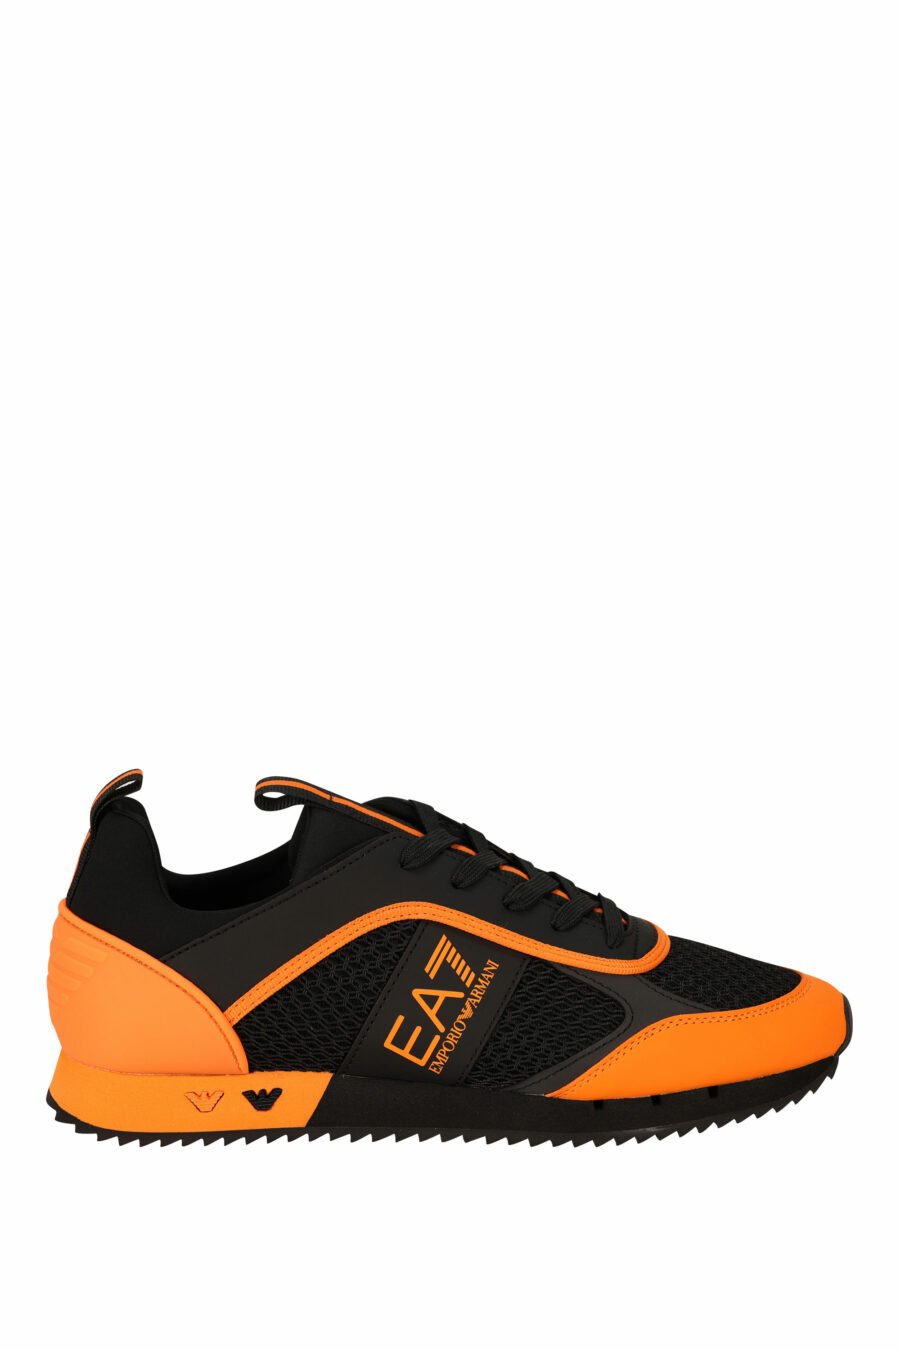 Black trainers with orange "lux identity" logo - 8057970798118